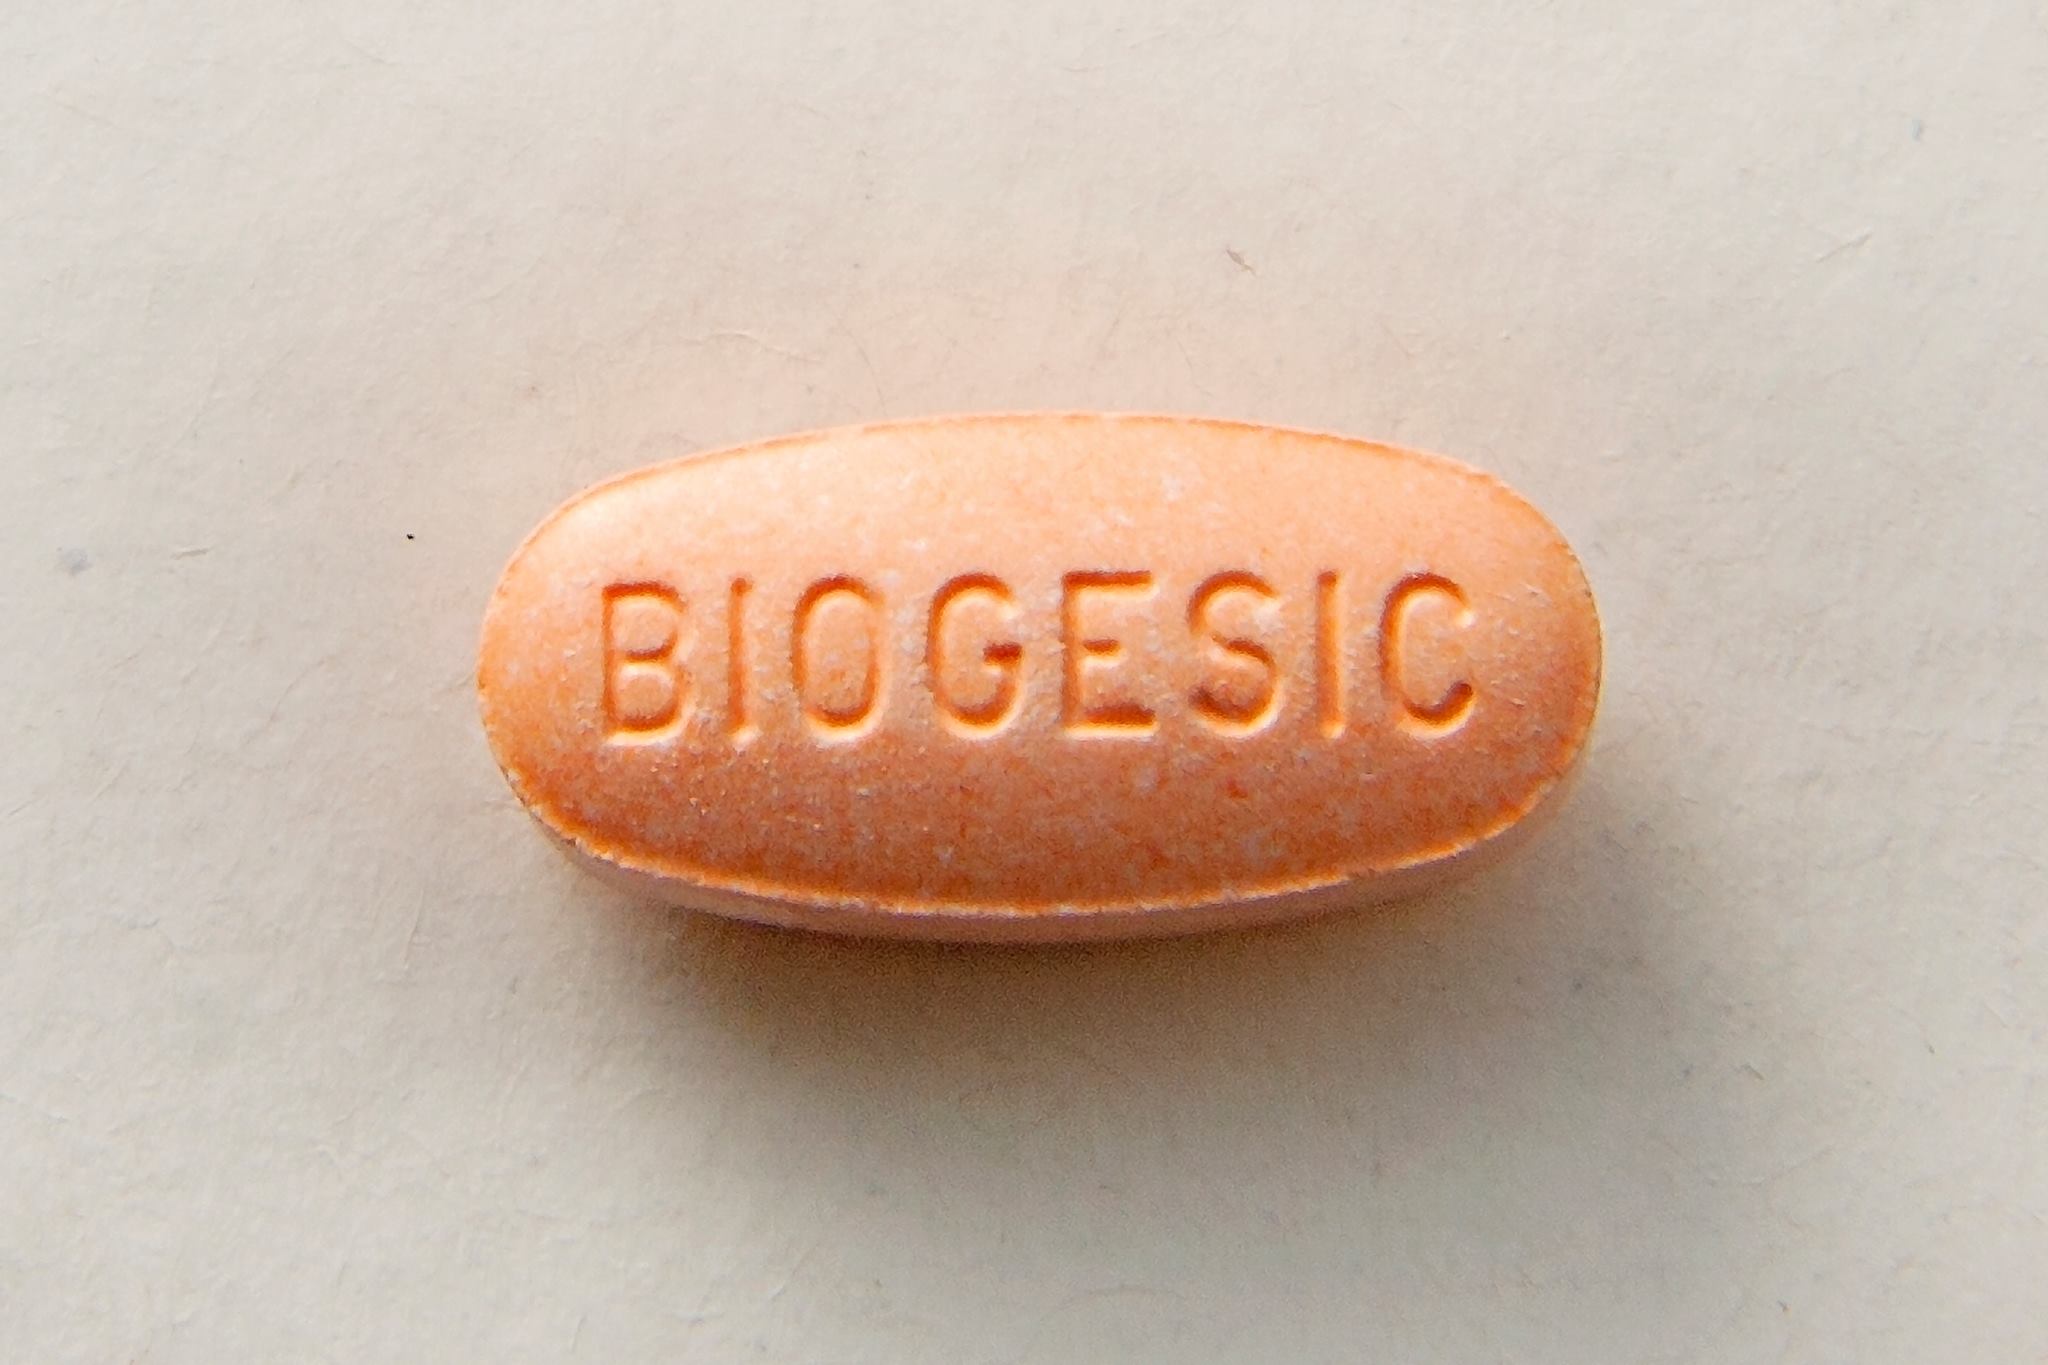 Biogesic Cure a Hangover